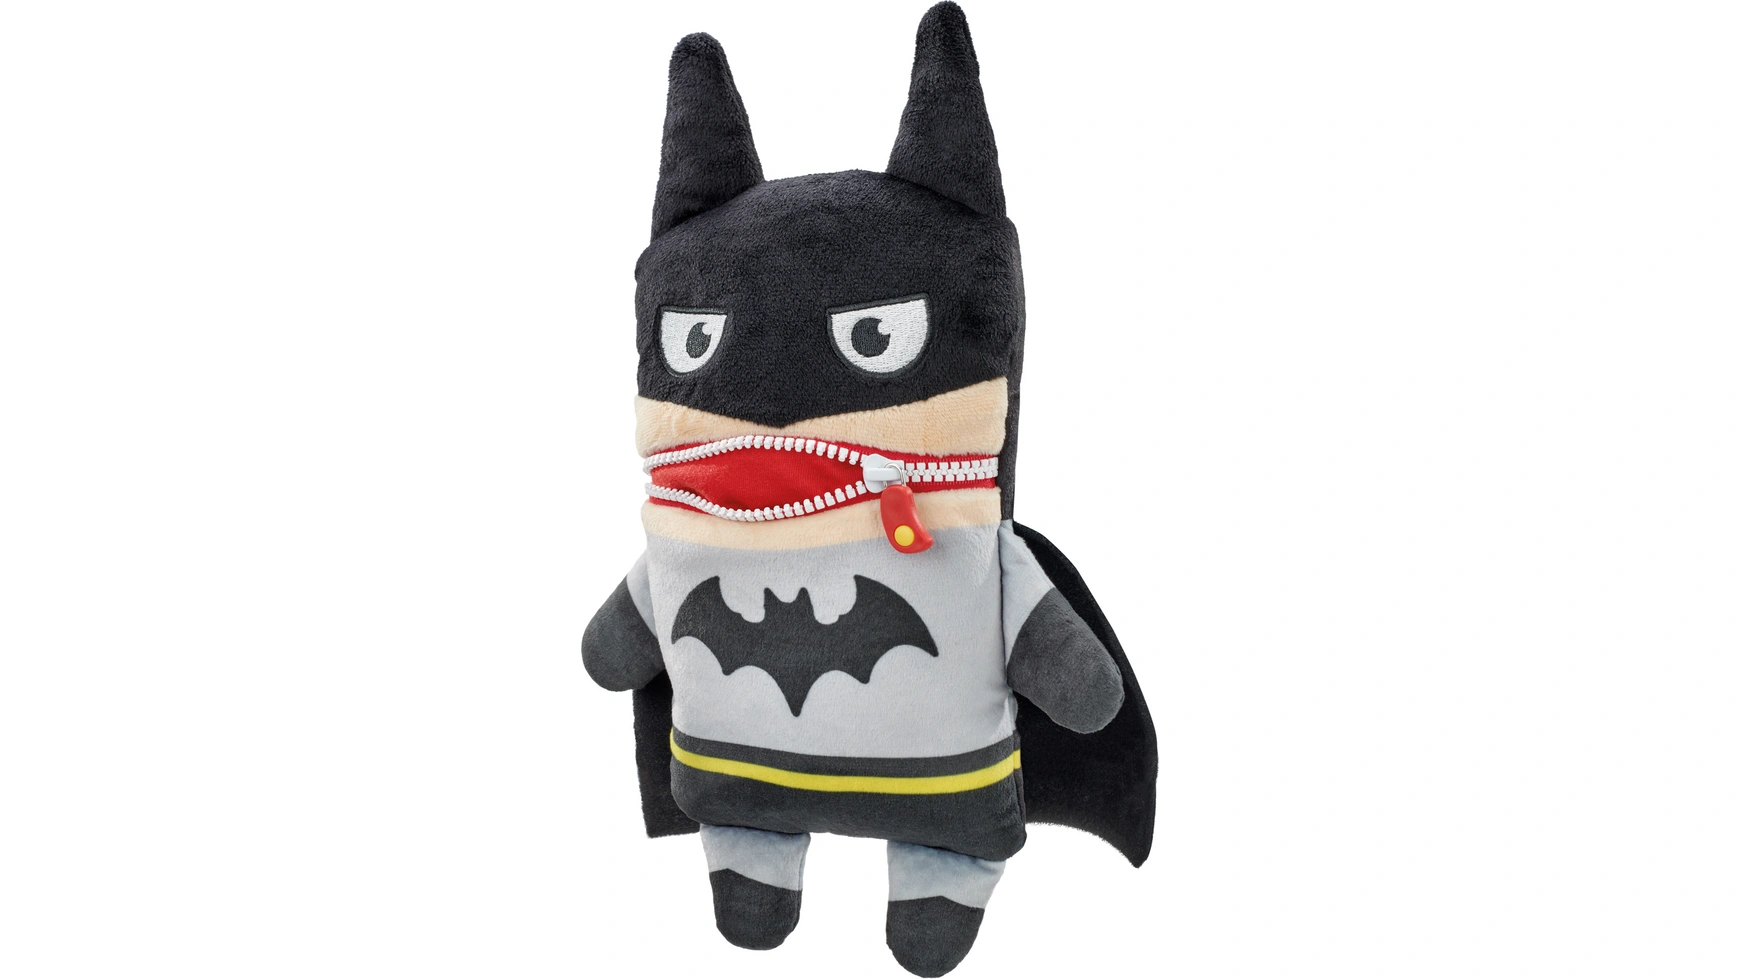 Schmidt Spiele Worry Eater DC Super Hero: Worry Eater, Бэтмен, 29 см наклейка патч для одежды dc super friends бэтмен 1